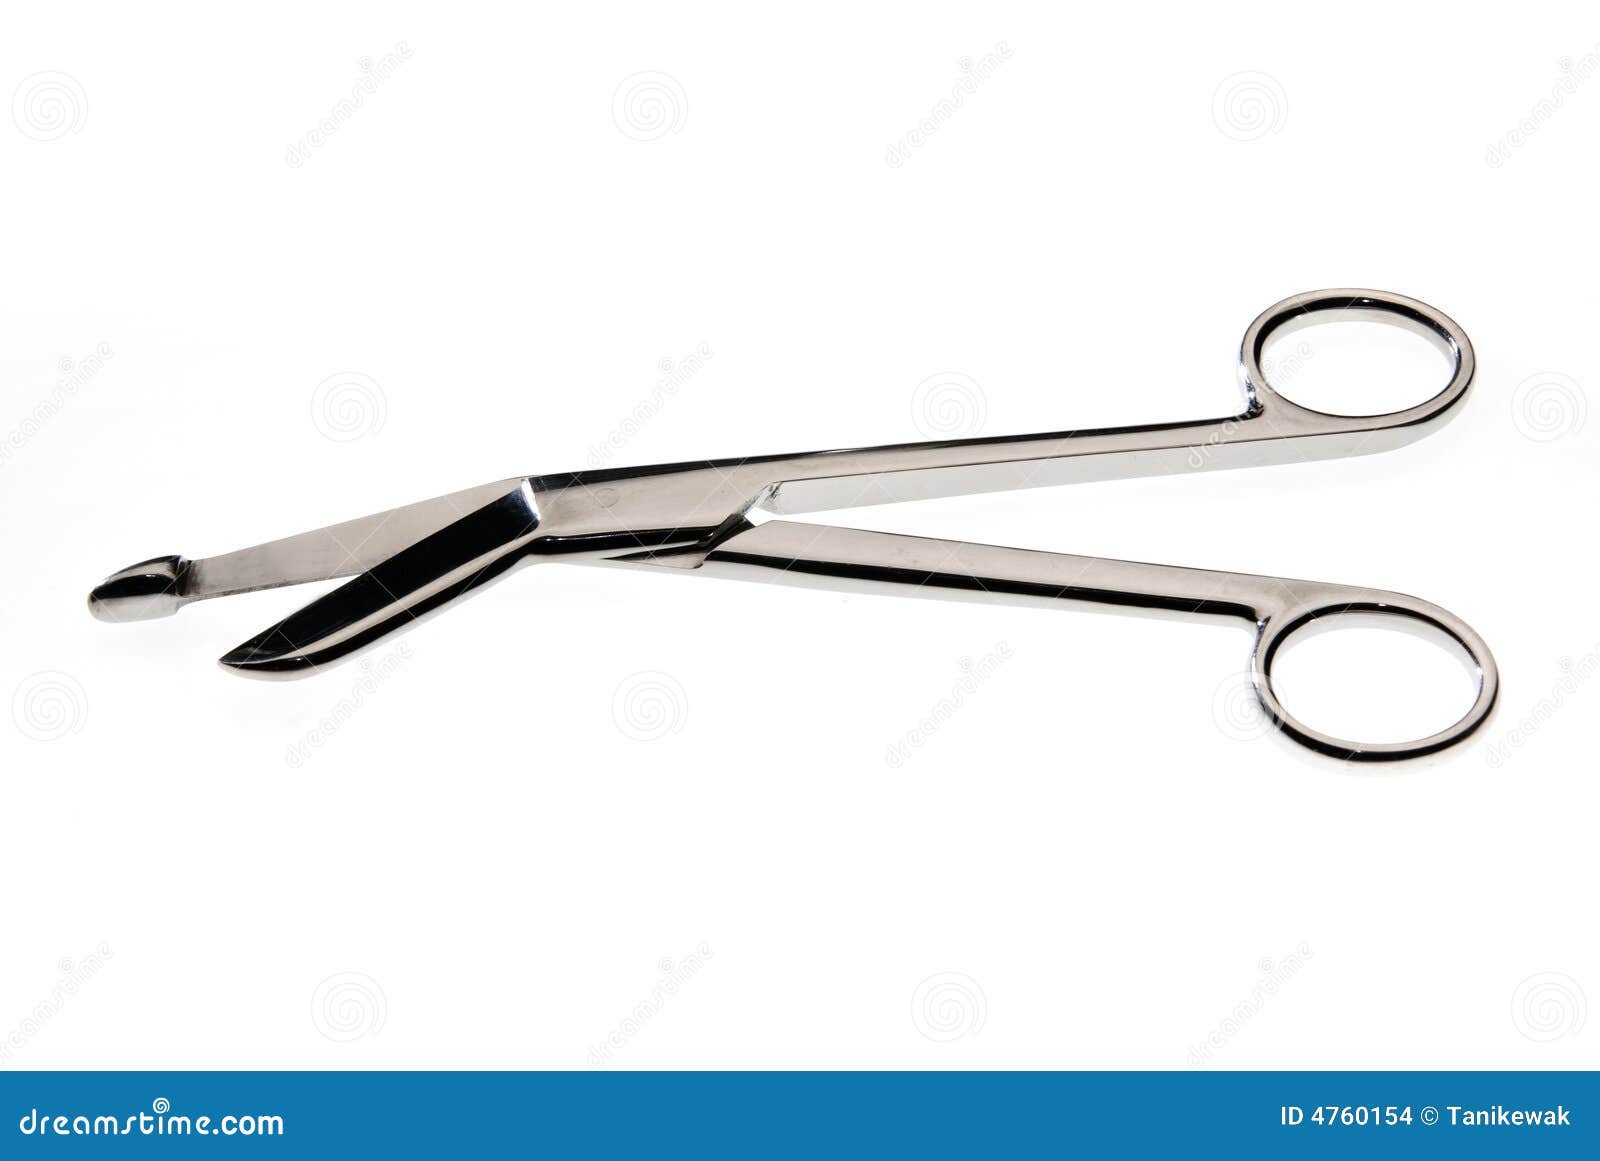 Stainless steel scissors1 stock photo. Image of healthcare - 4760154